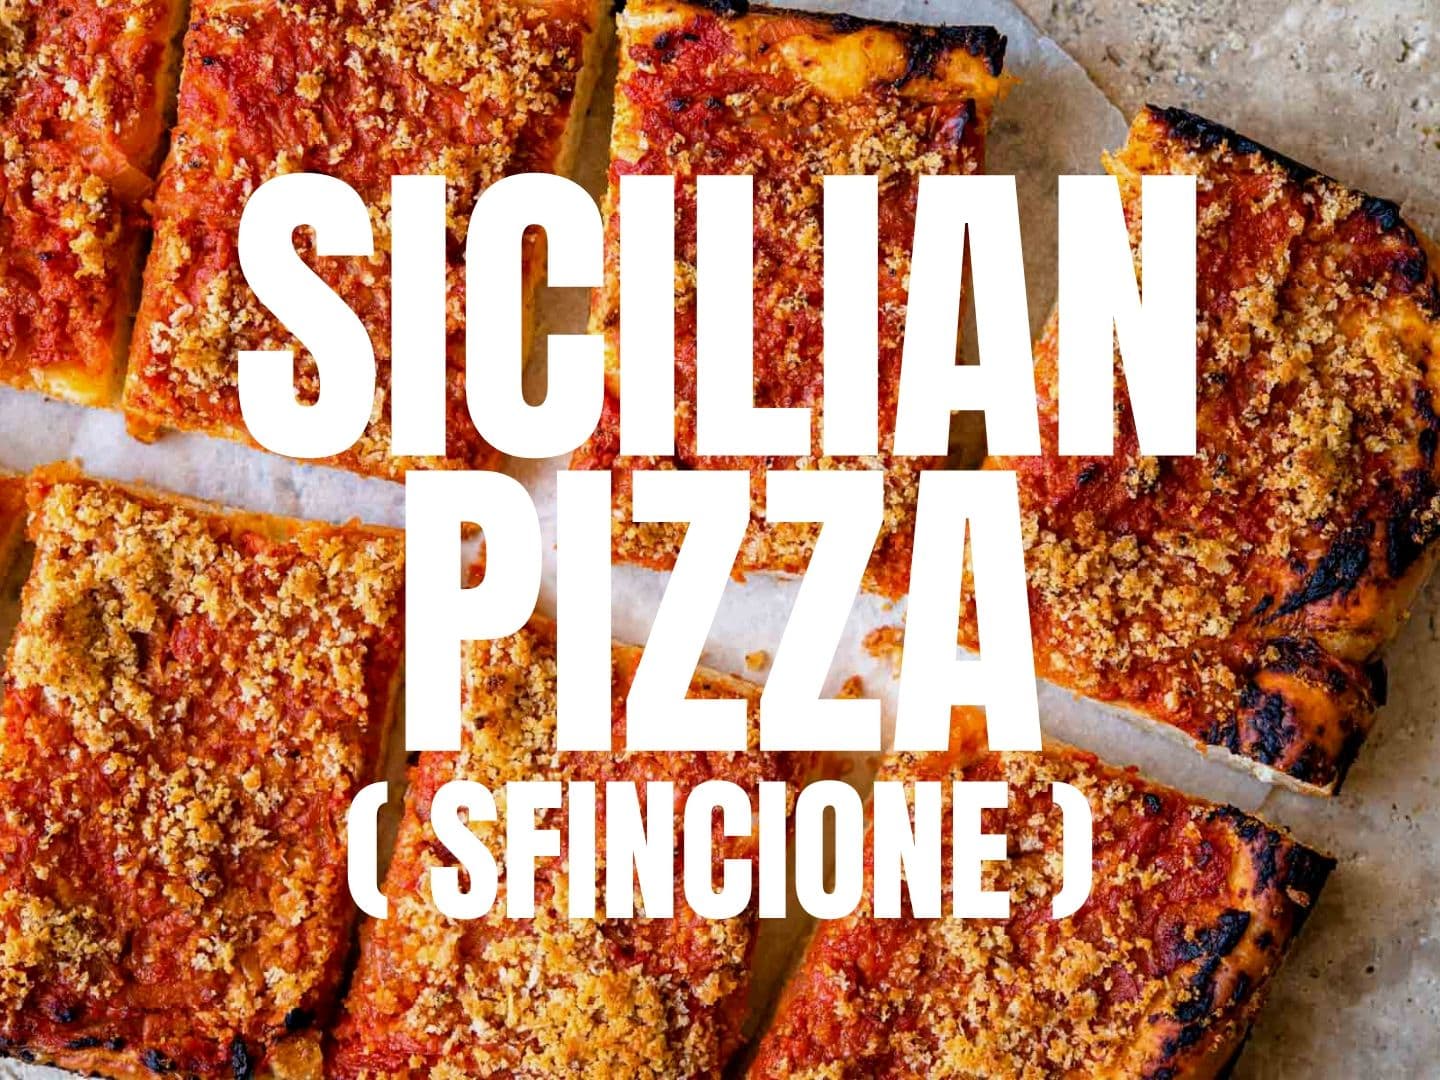 Sicilian Classic Pizza Delivery Near Me - Best Sicilian Style